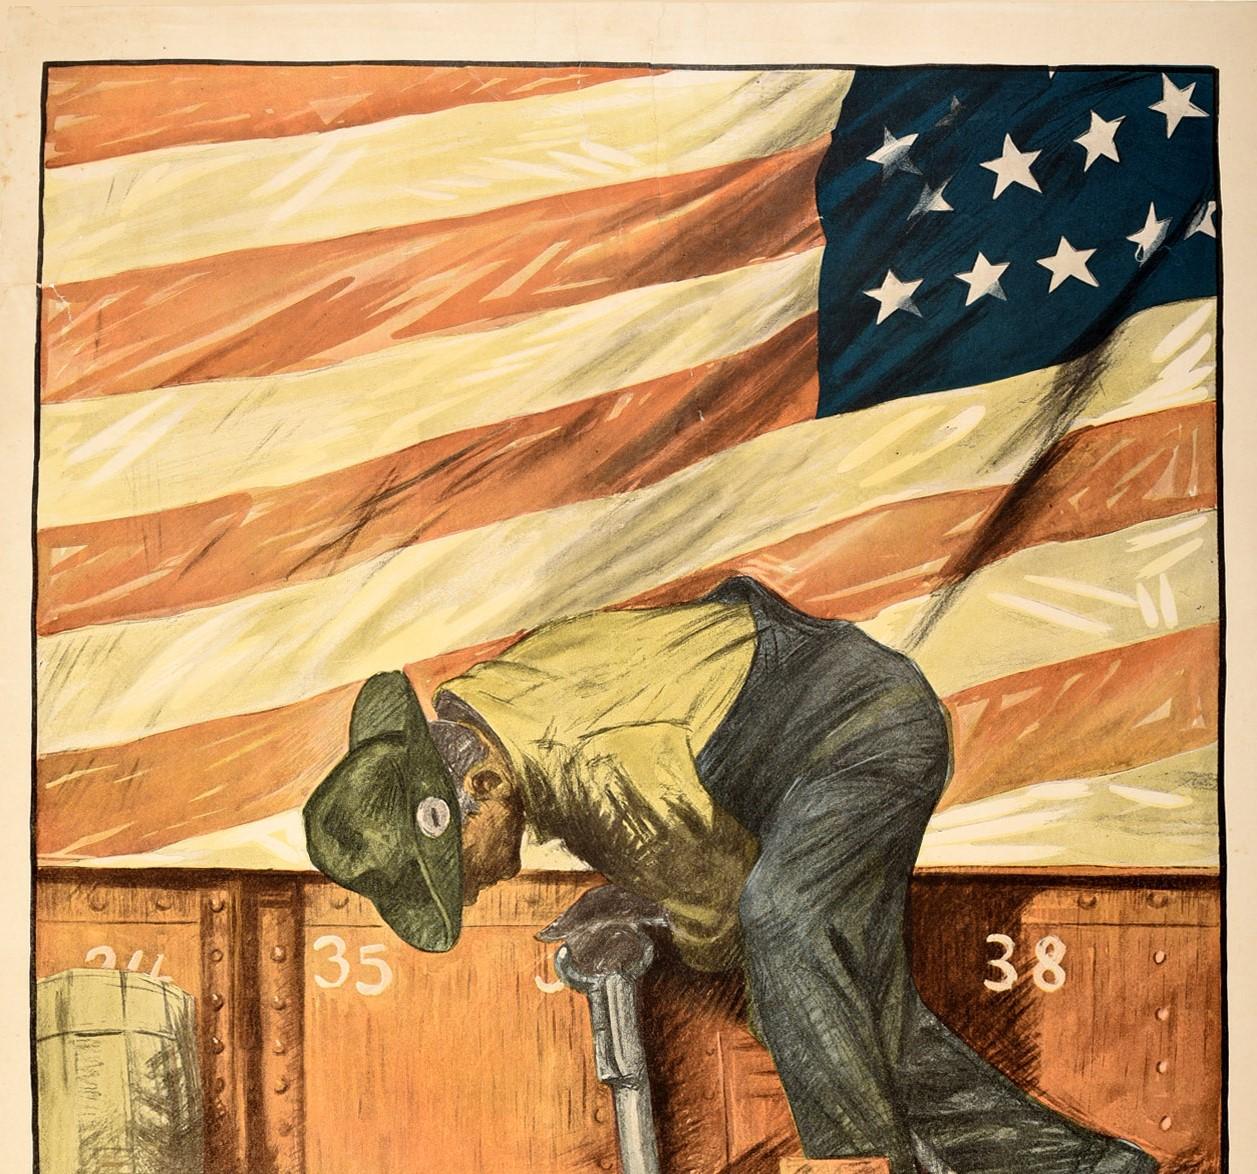 Original Antique Poster Teamwork Wins US Shipping Board Emergency Fleet WWI Flag - Print by Hibberd Van Buren Kline